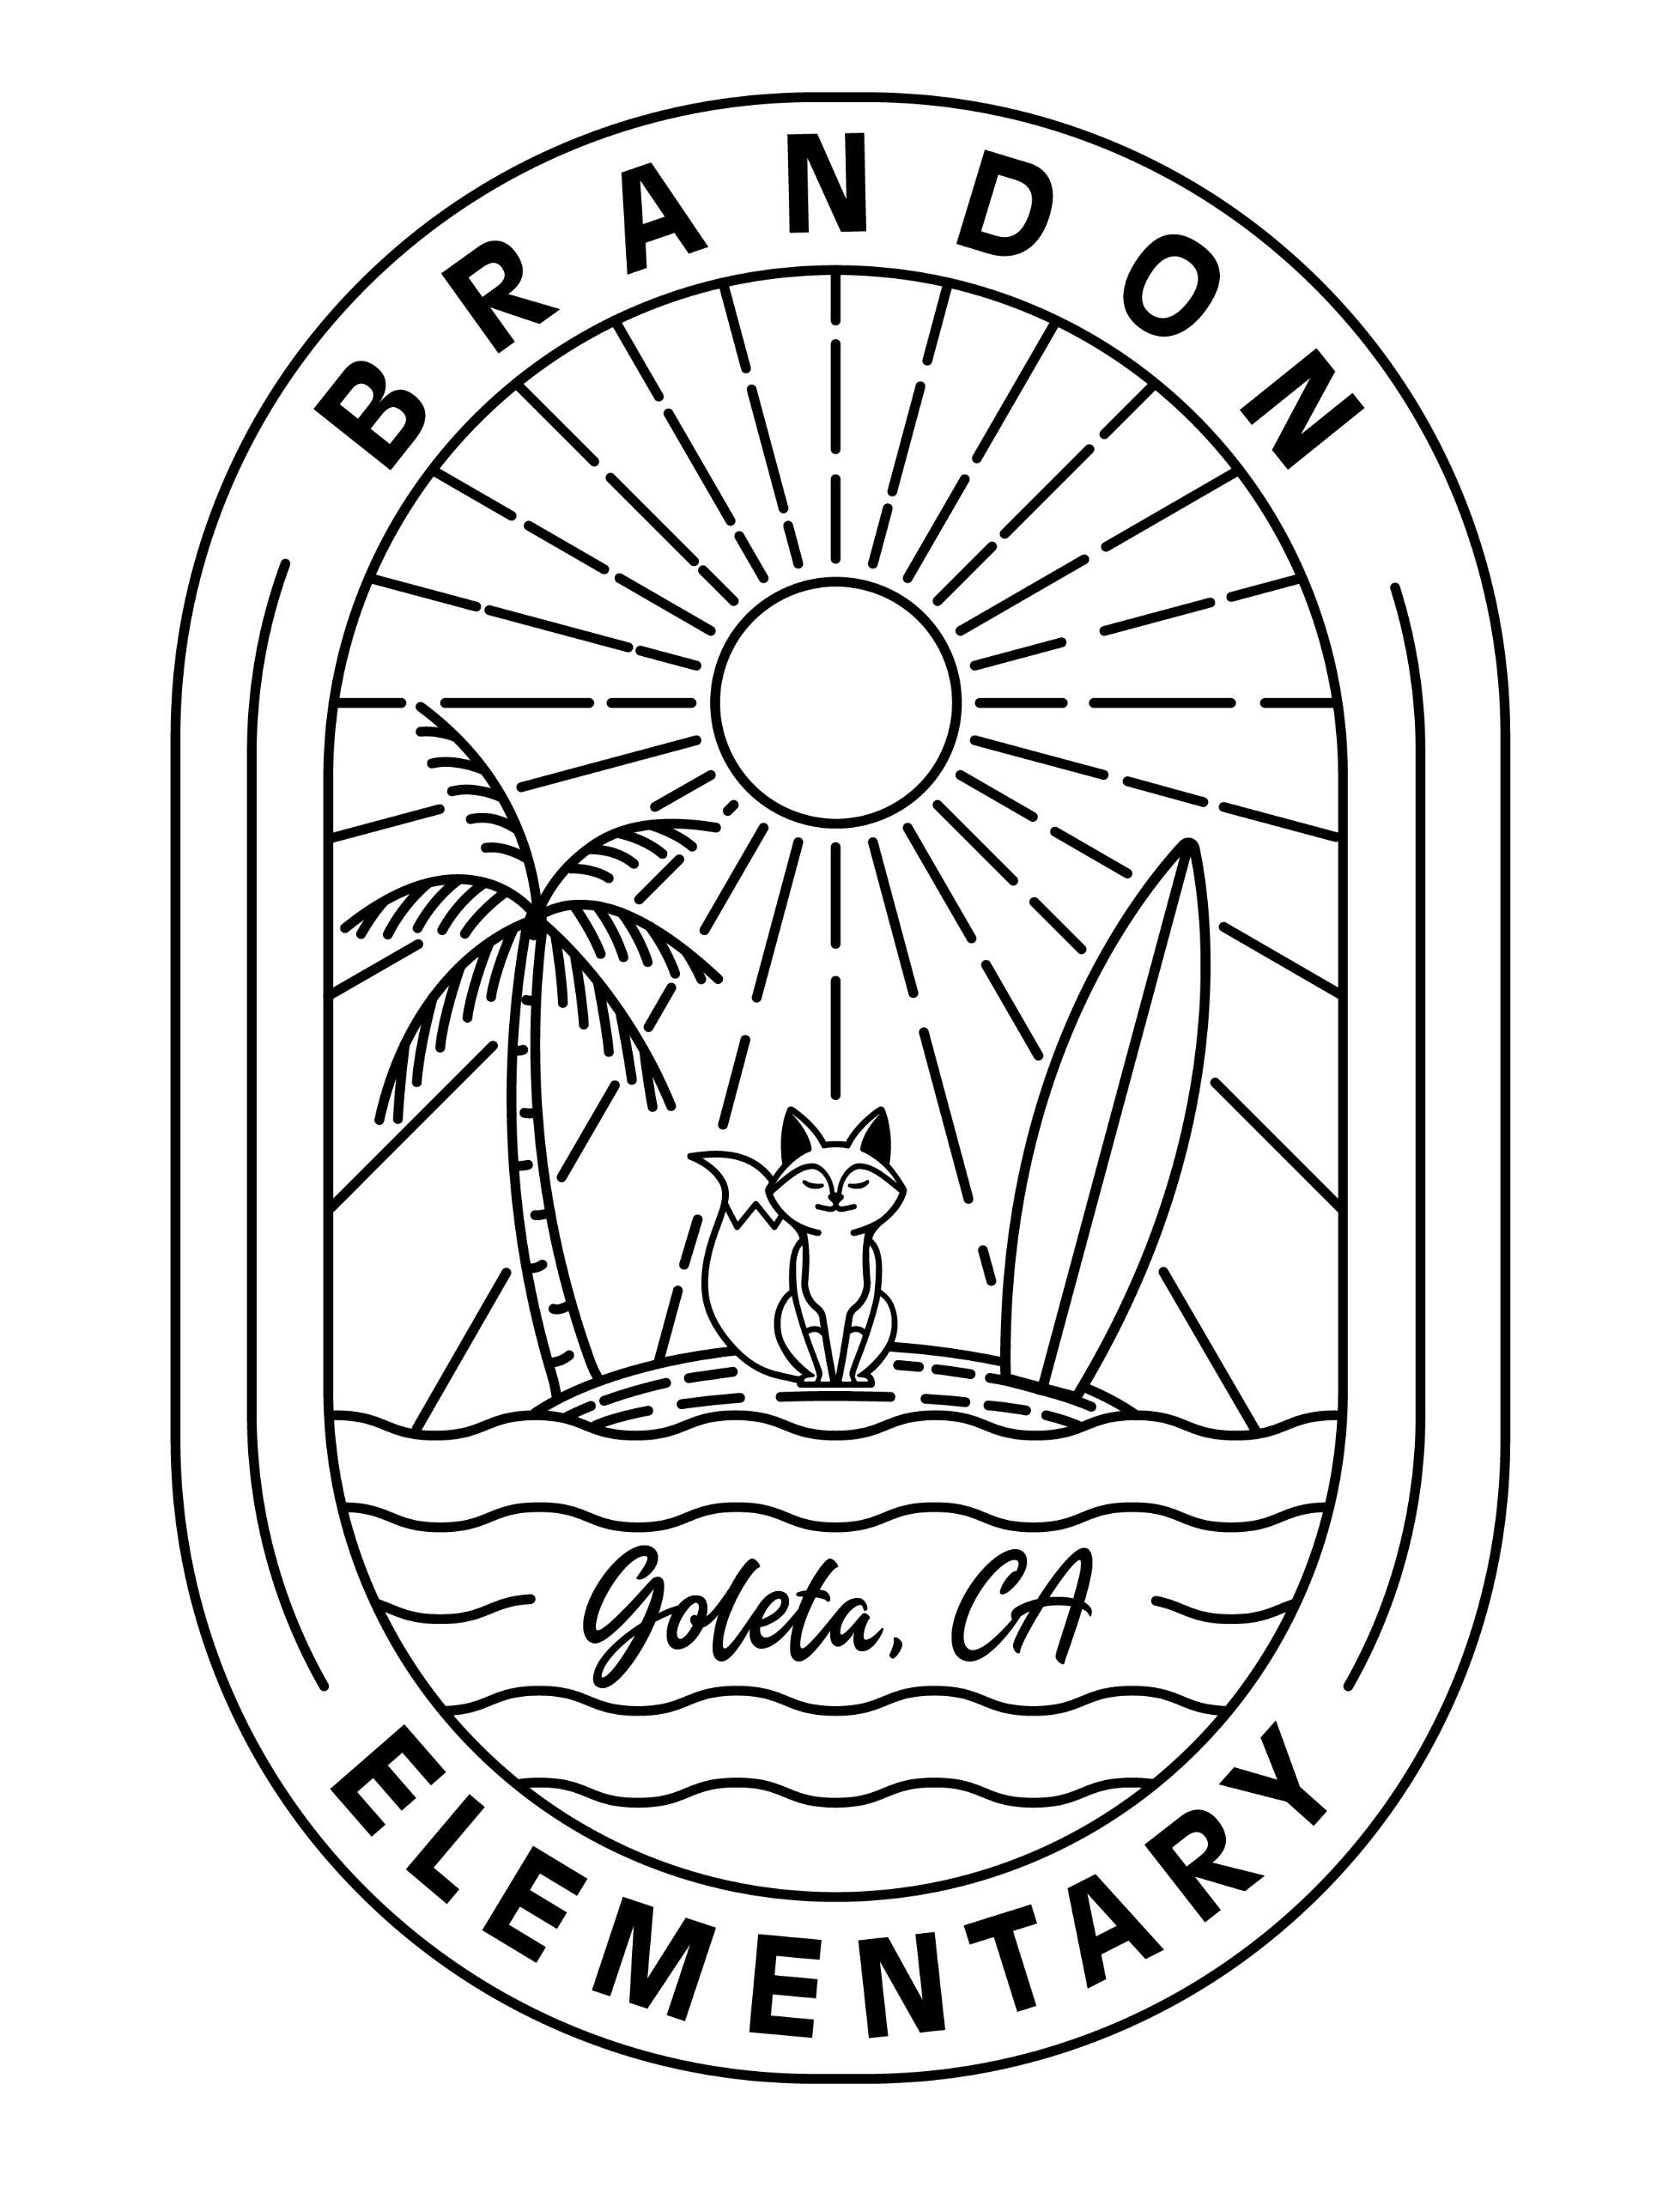 Brandon logo